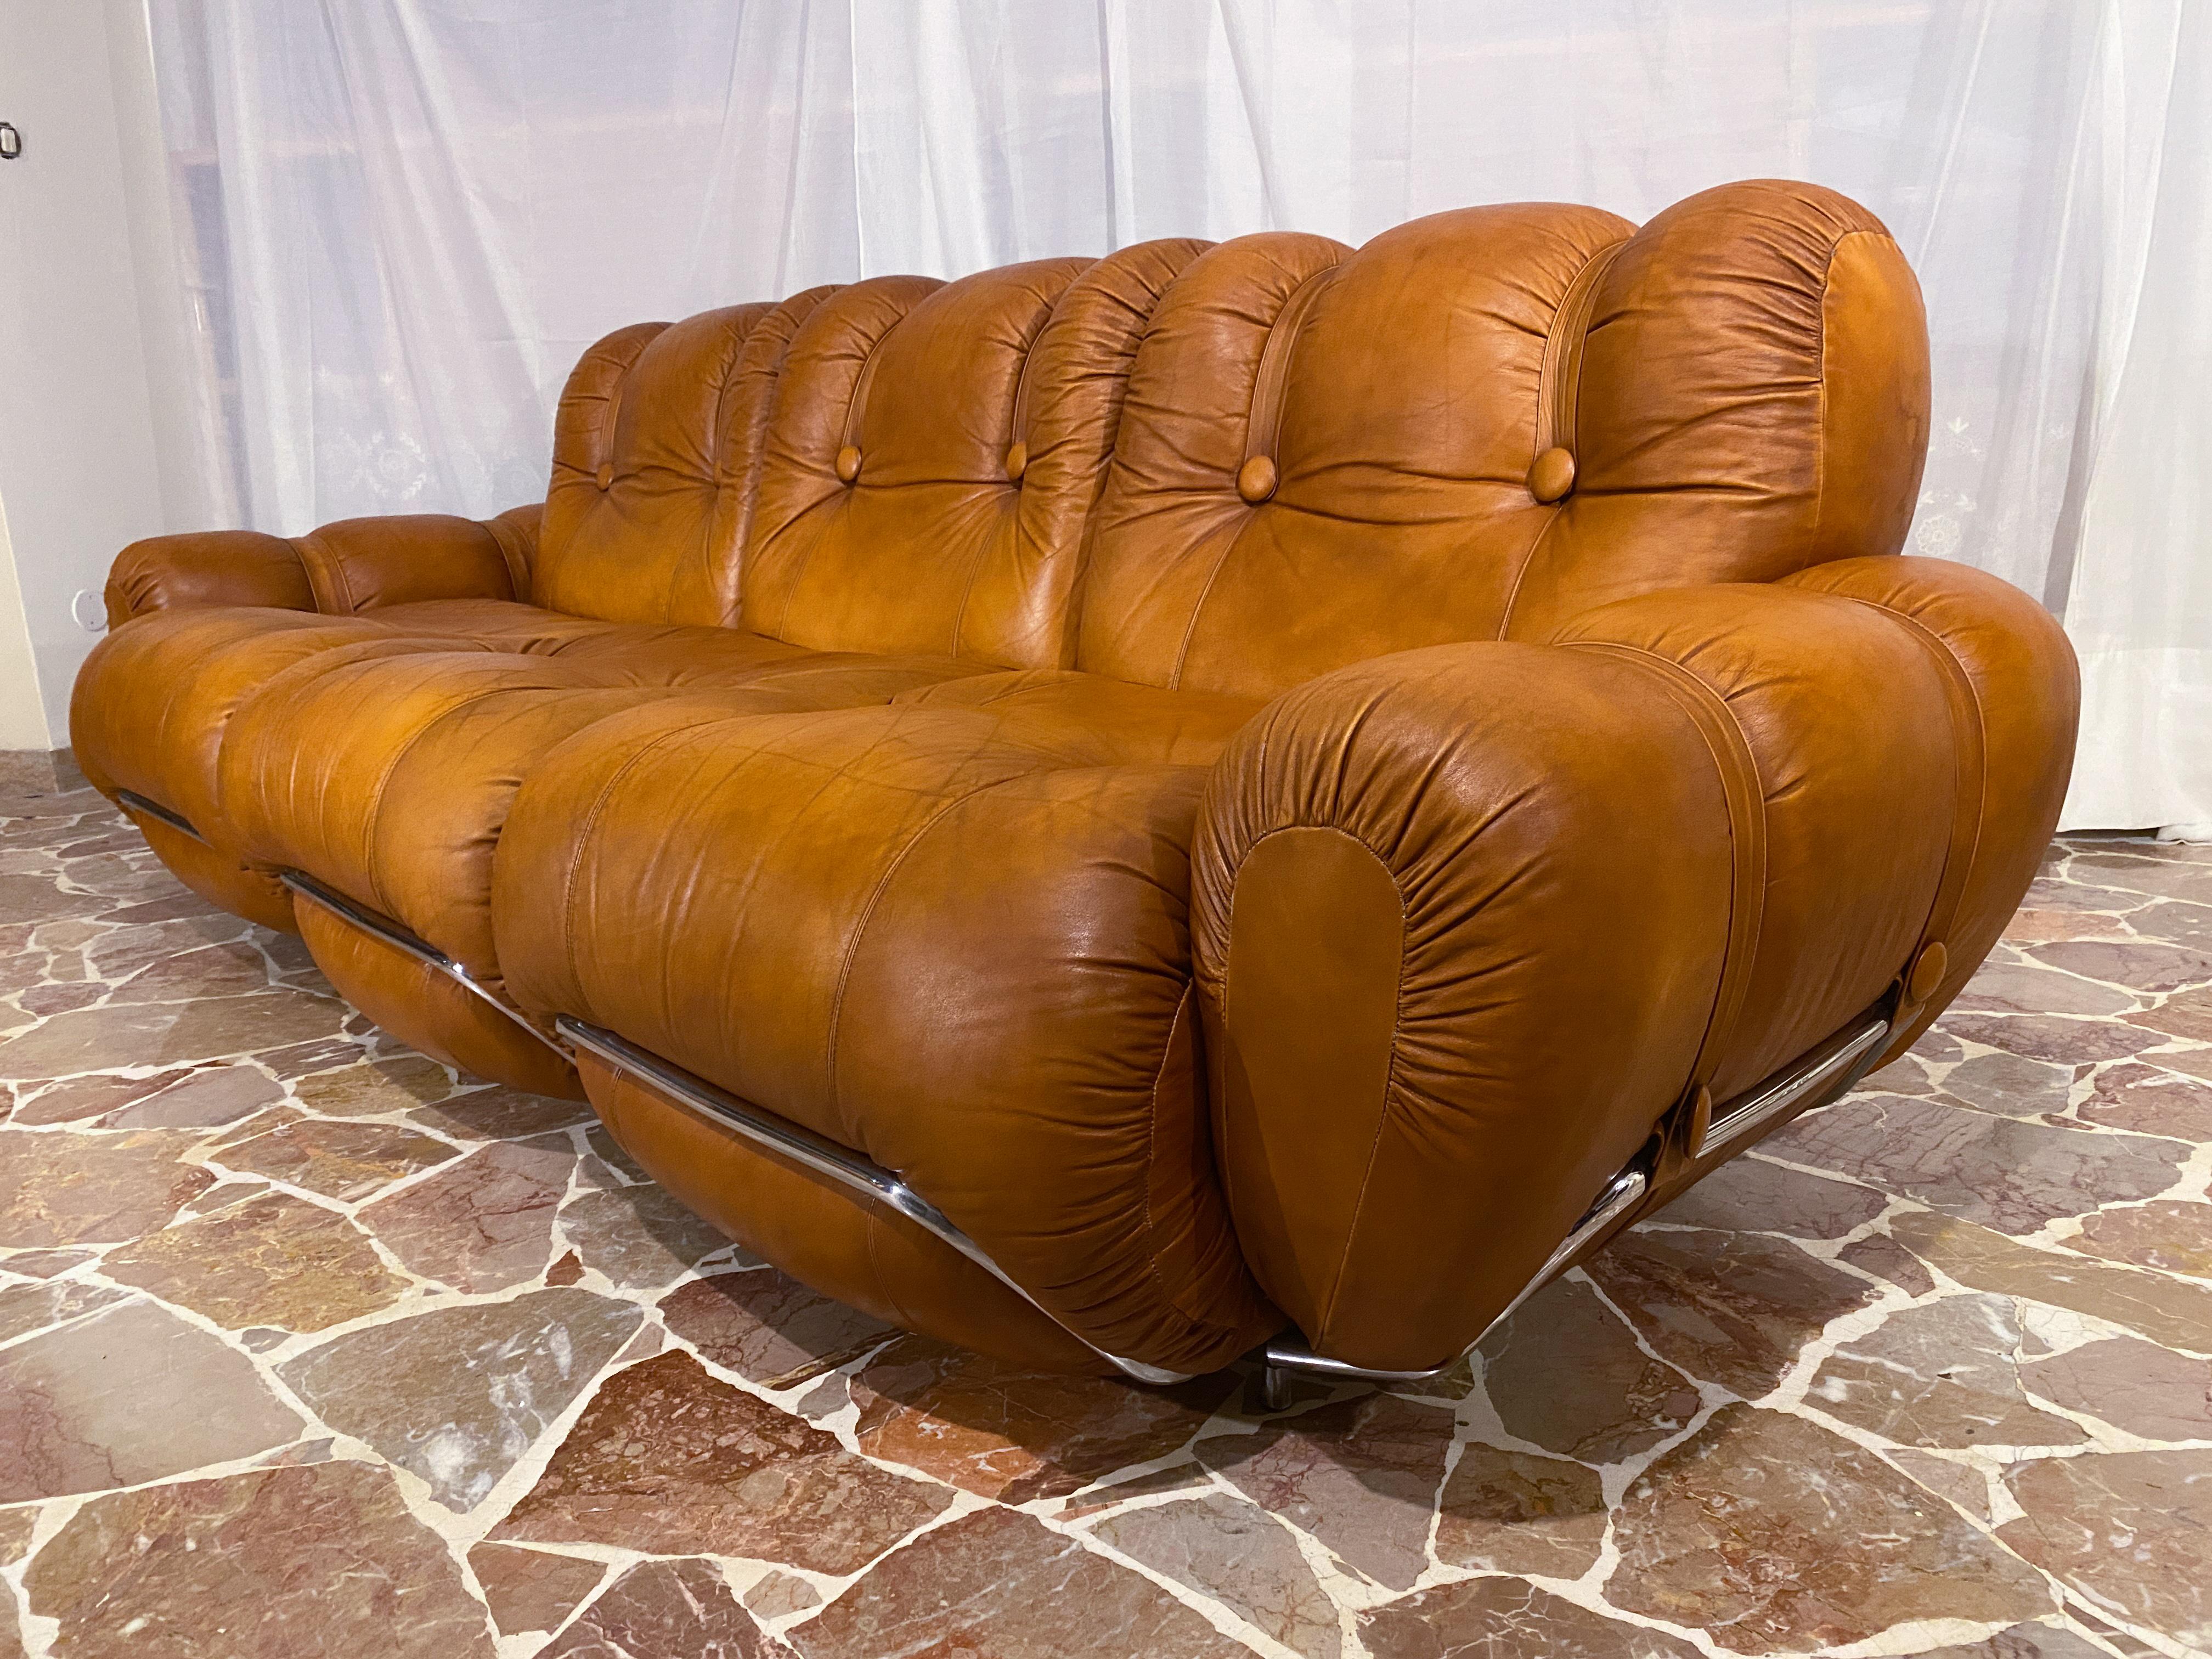 70s style sofa